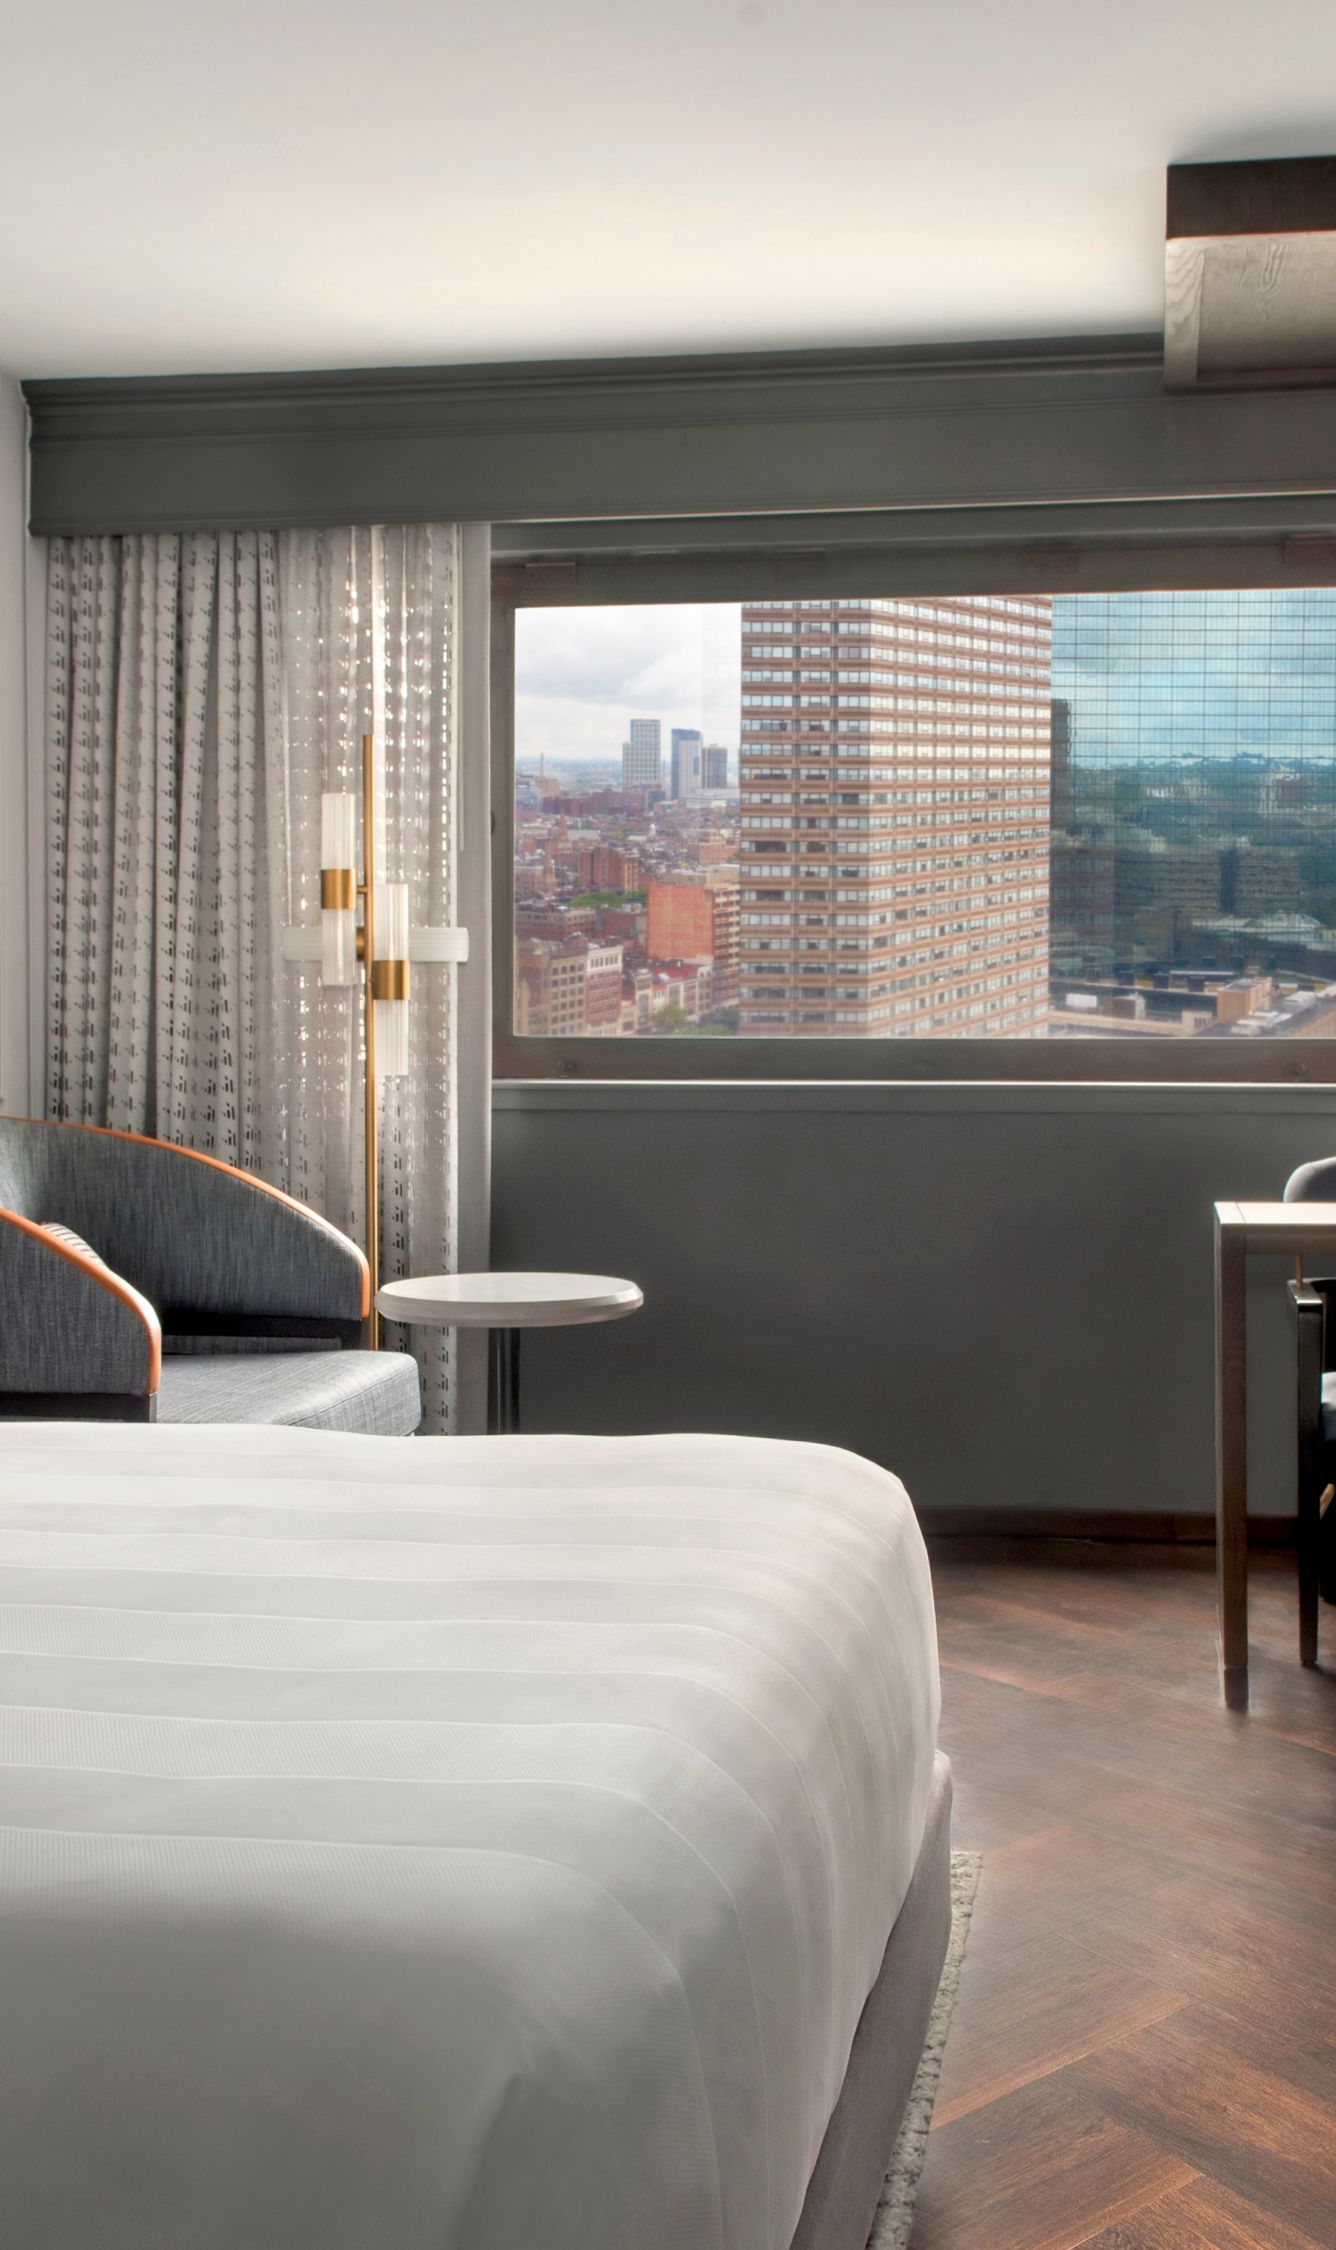 My $80 Boston Marriott Copley Place room with breakfast – Loyalty